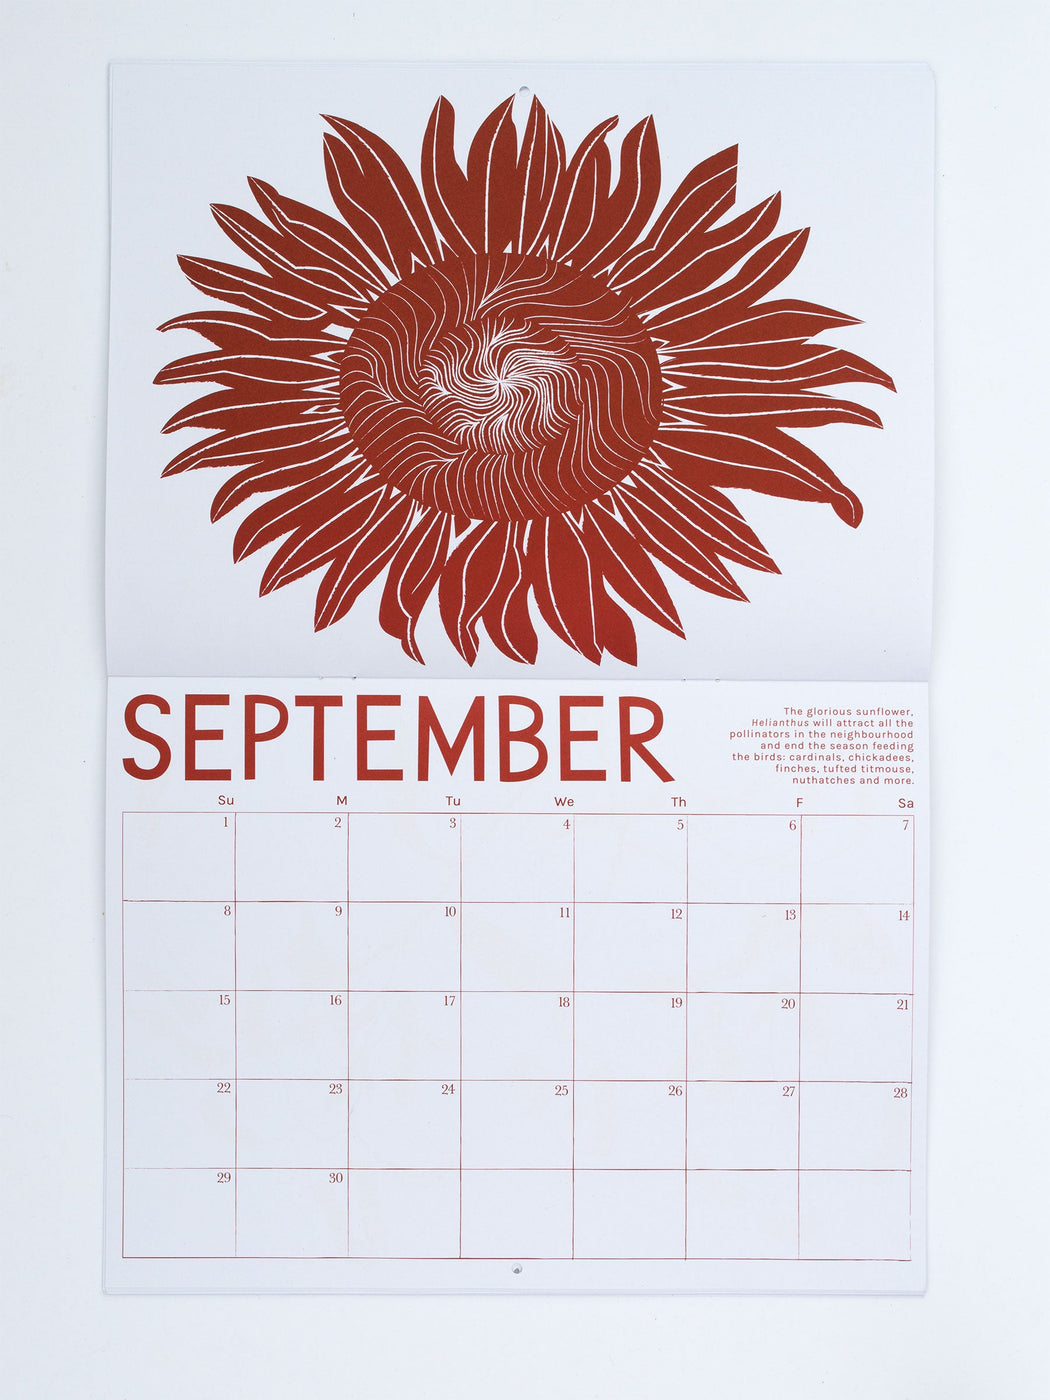 Big beautiful burgundy sunflower illustration for the month of September